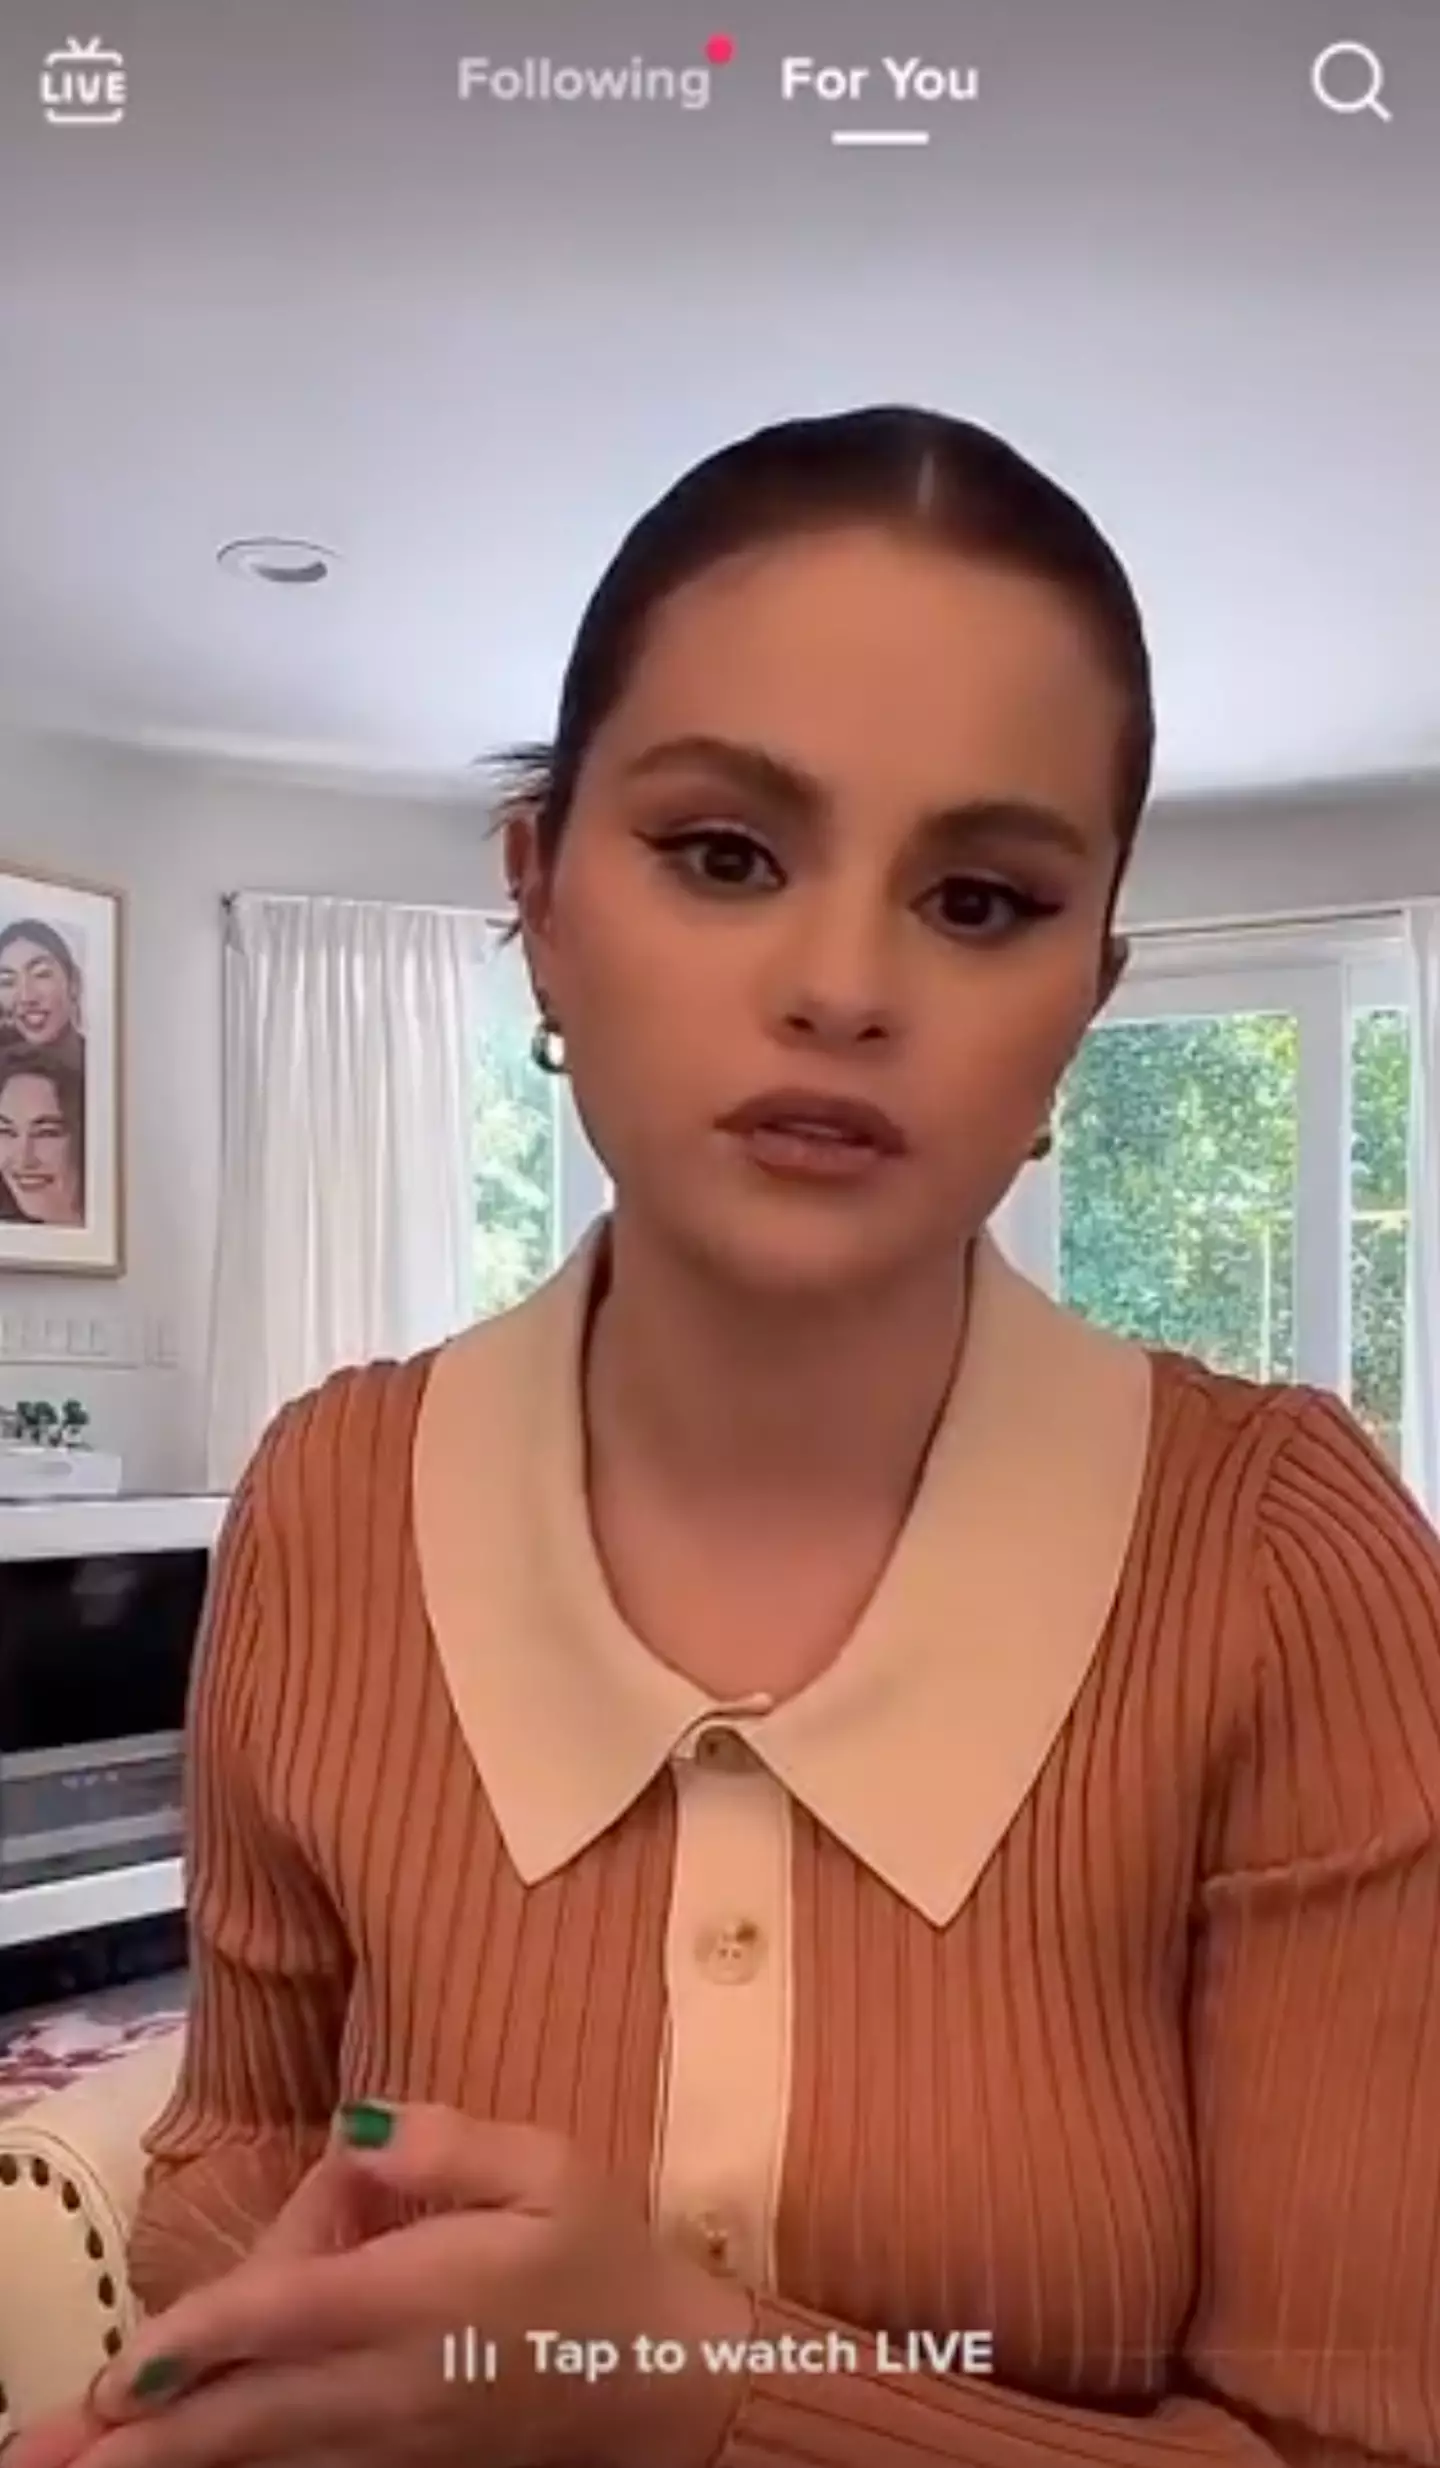 Selena Gomez addressed online hate on TikTok.